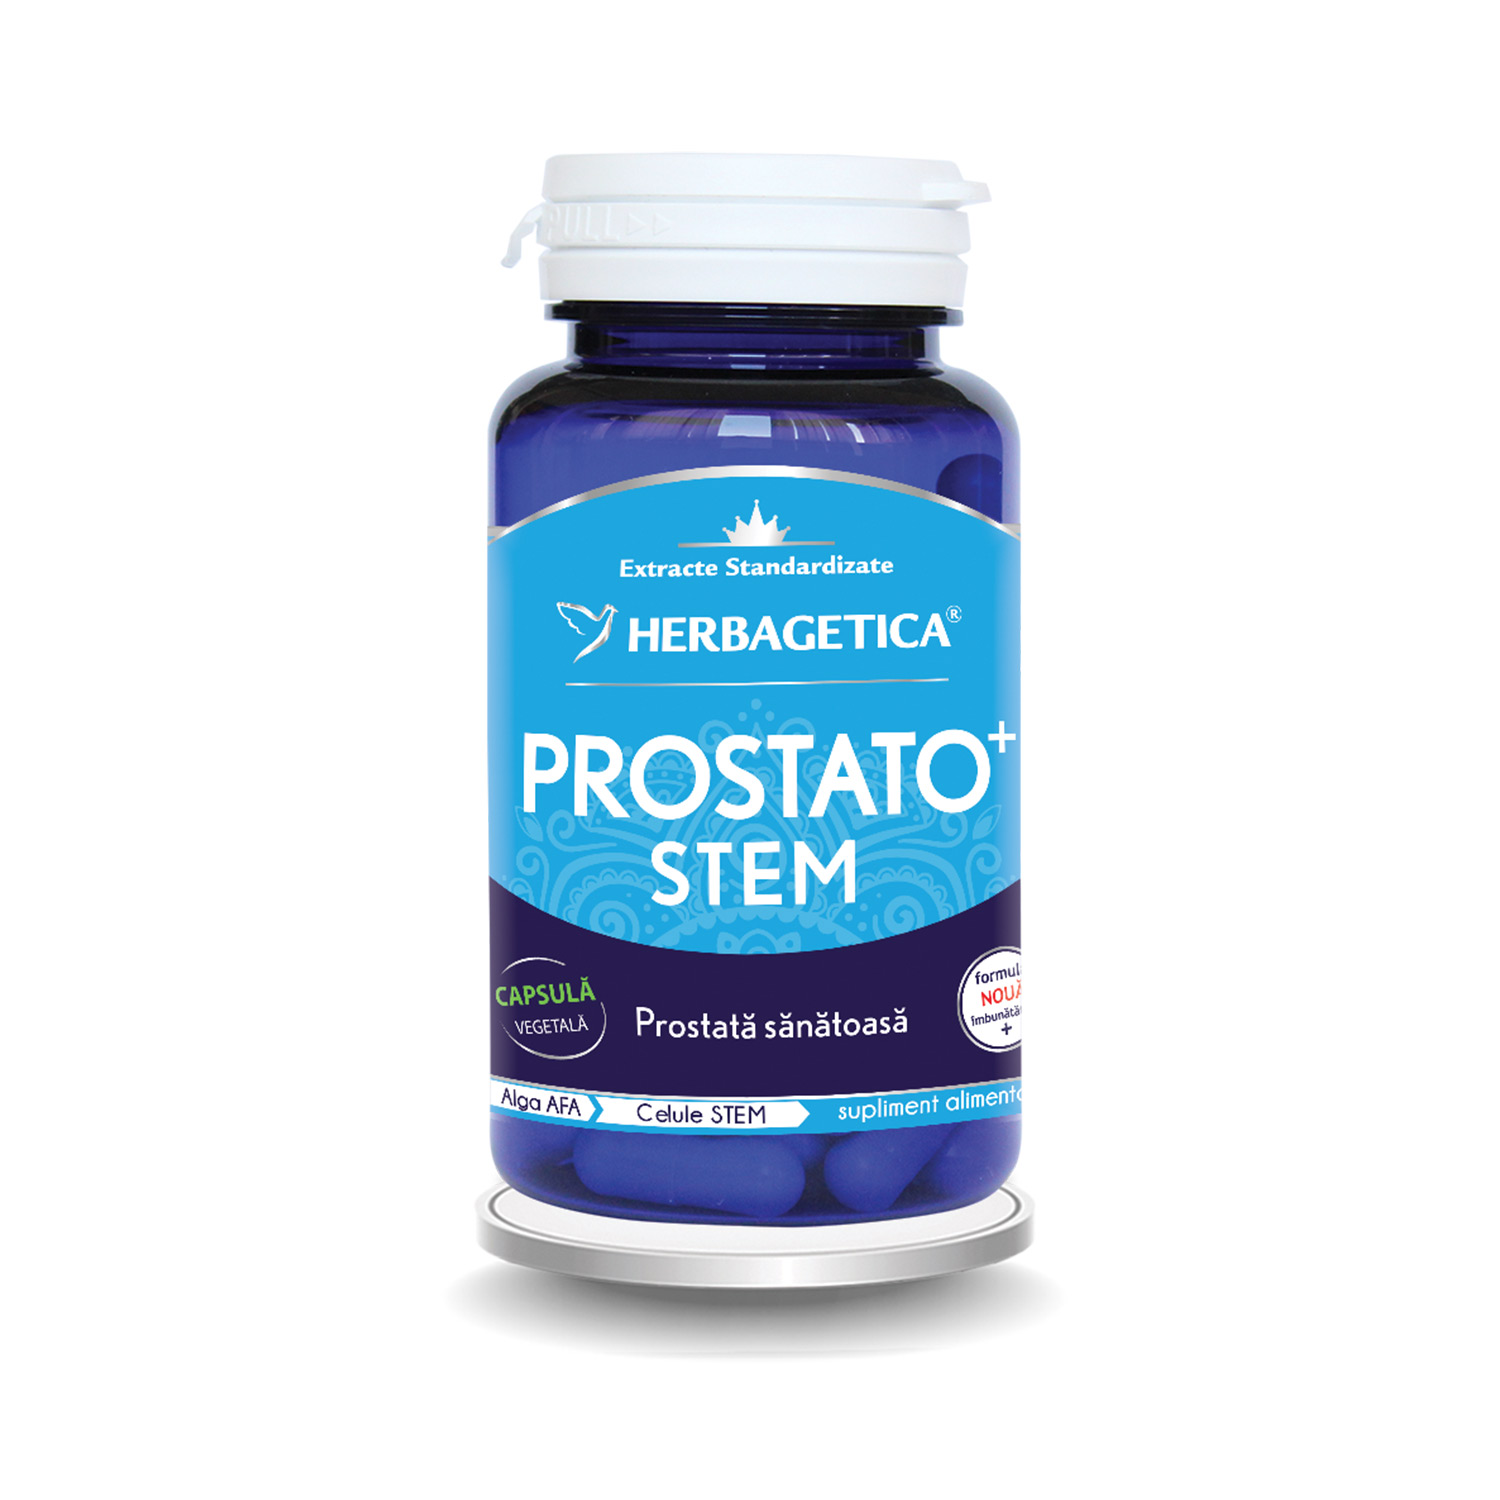 Stem prostata prospect | Prostaffect În România